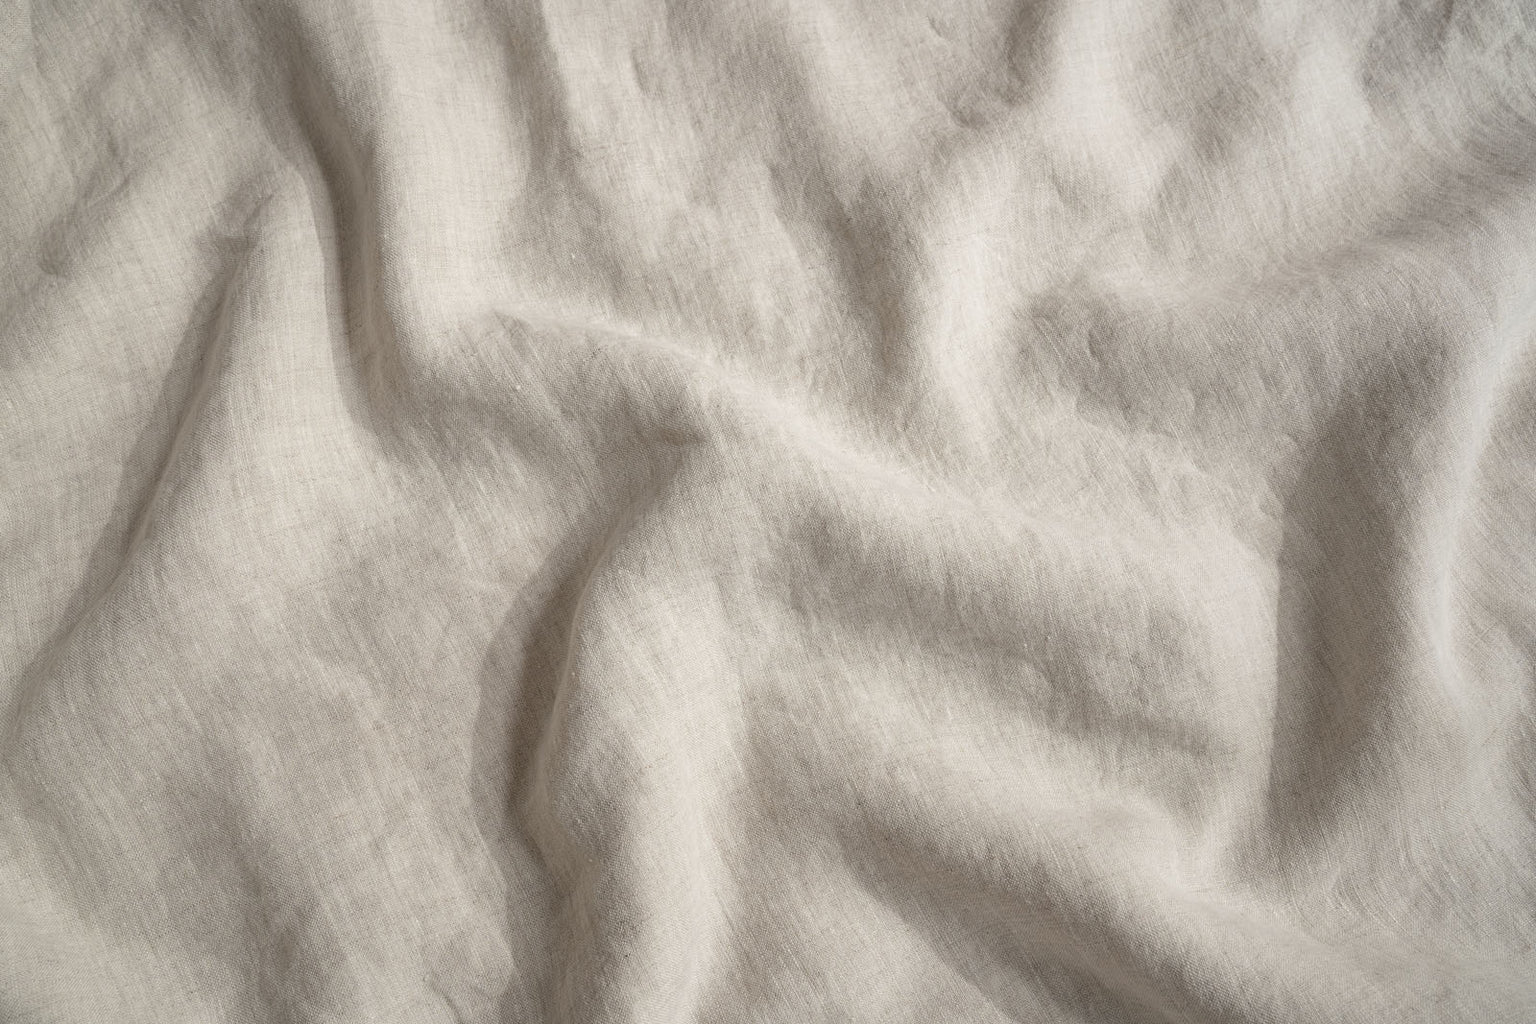 French Flax Linen Sheet Sets – I Love Linen